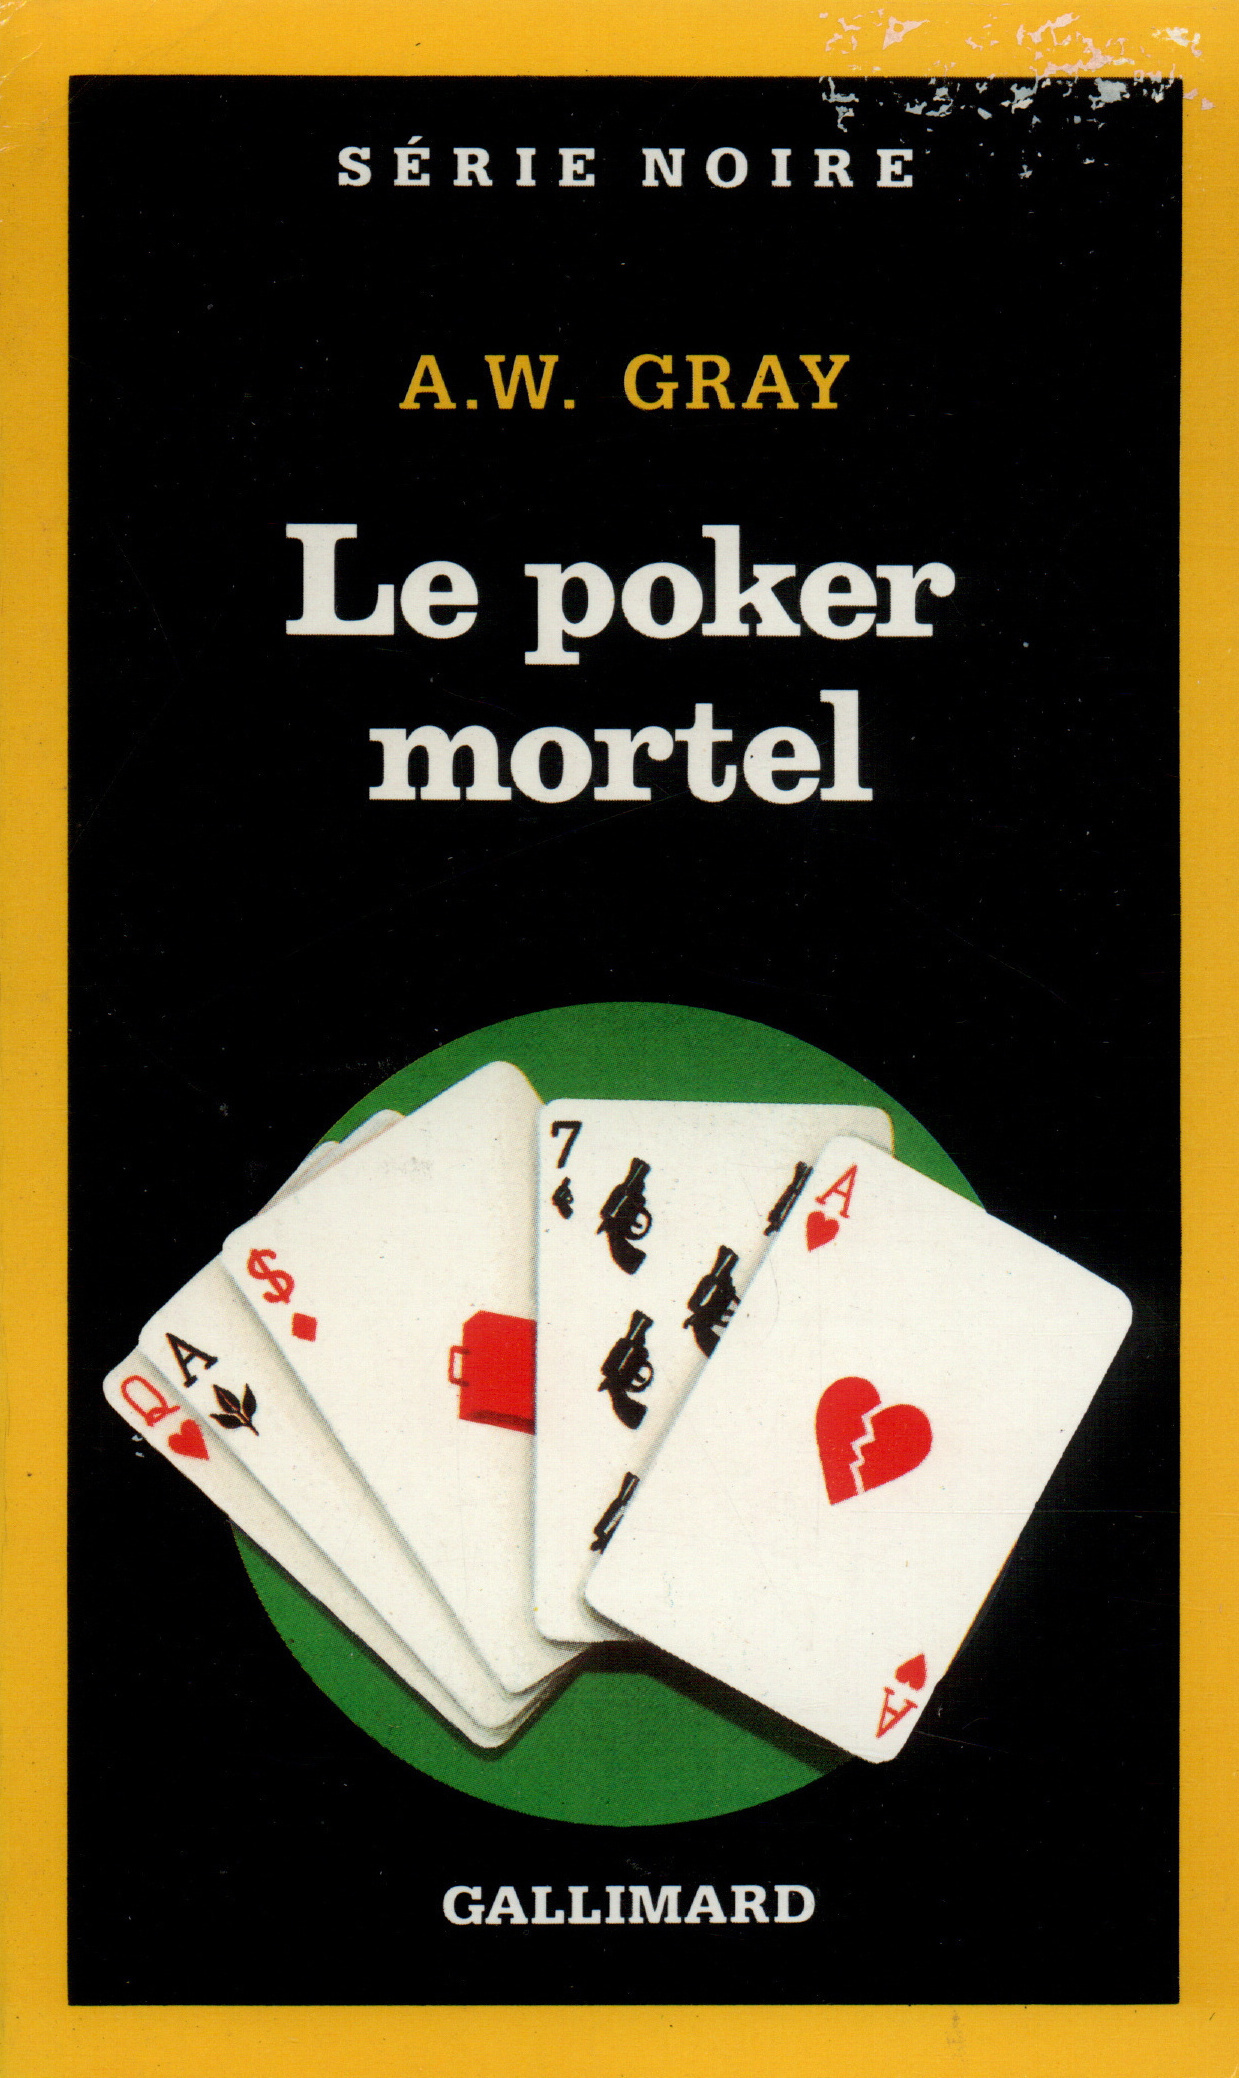 Le poker mortel (9782070492282-front-cover)